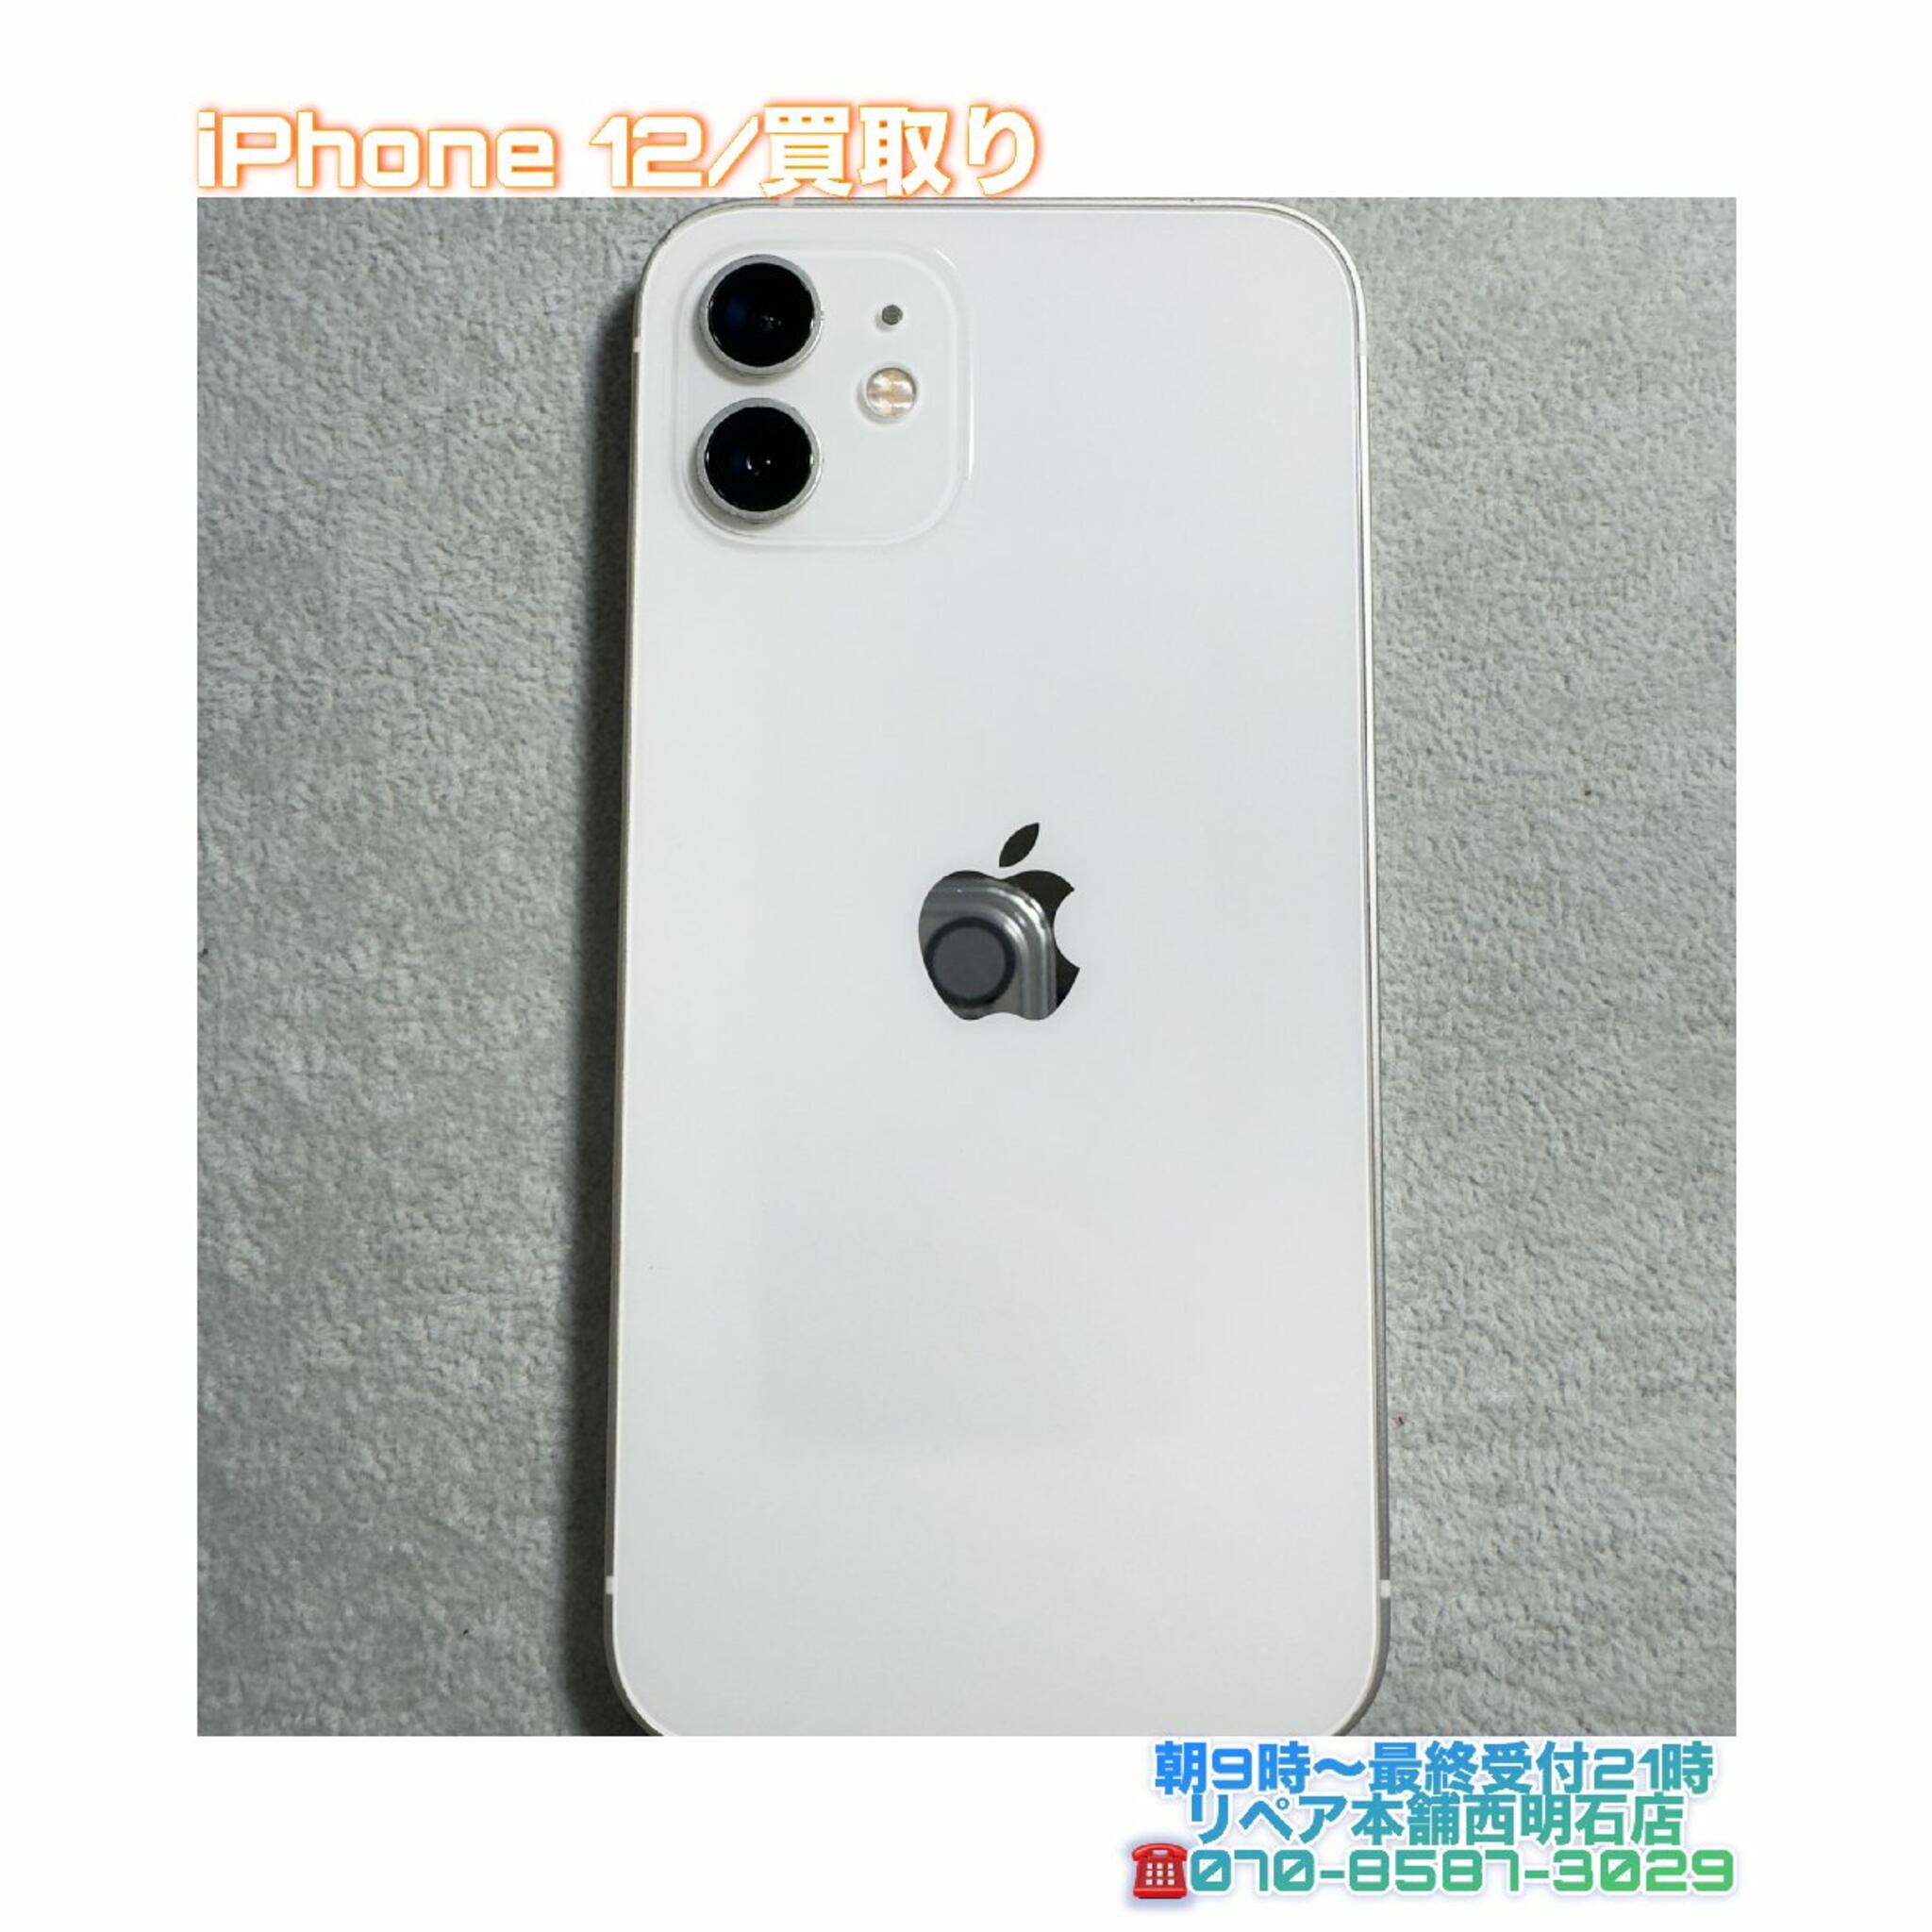 iPhone修理 明石 リペア本舗 西明石店からのお知らせ(💡神戸市西区の方より、iPhone 12買取りのご依頼を頂きました✨)に関する写真